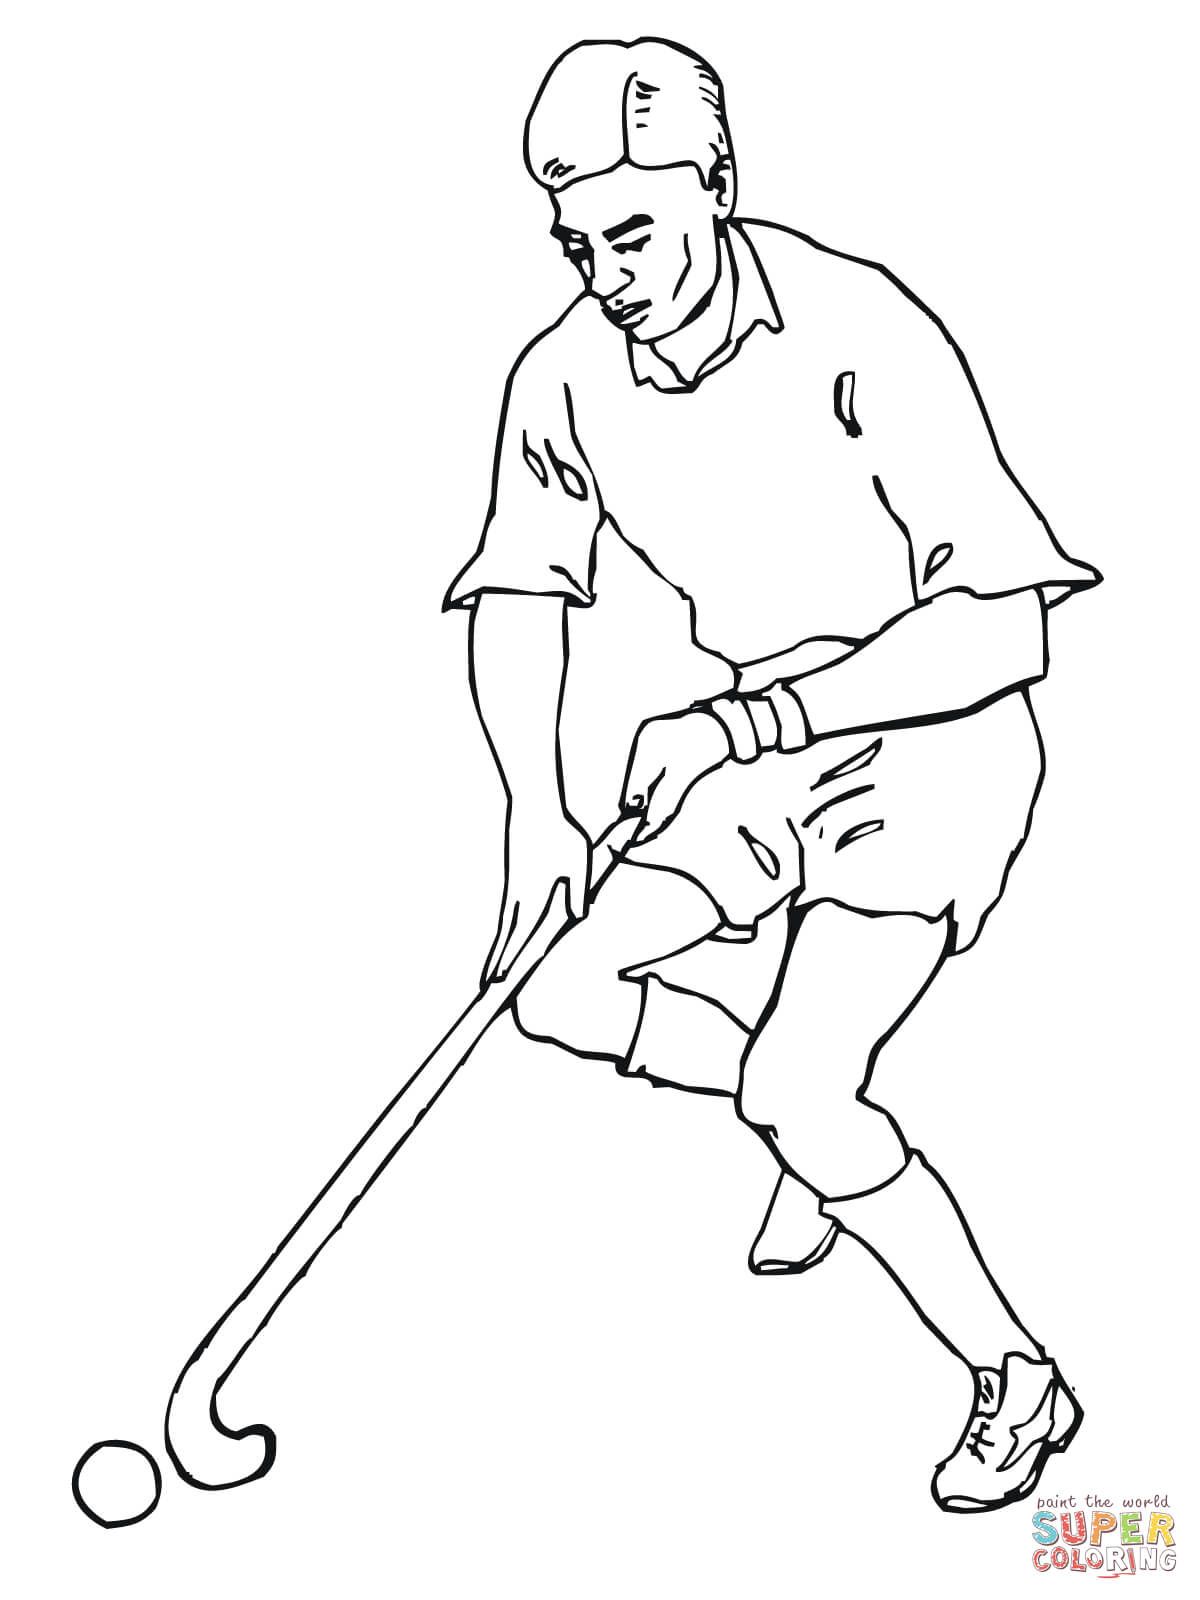 Hockey game drawing on Craiyon